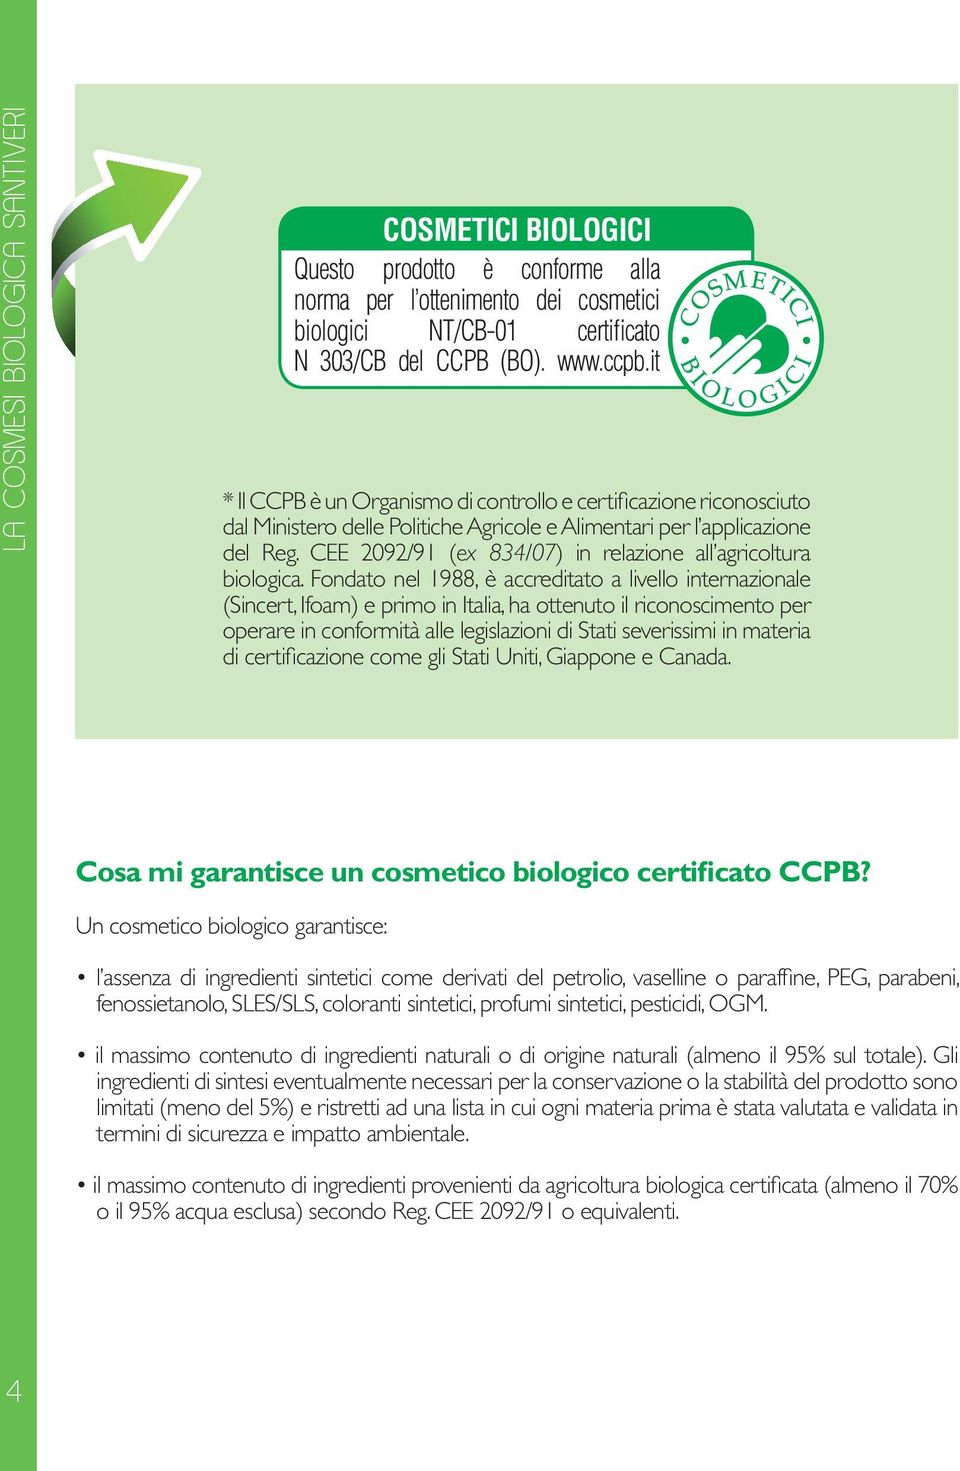 CEE 2092/91 (ex 834/07) in relazione all agricoltura biologica.